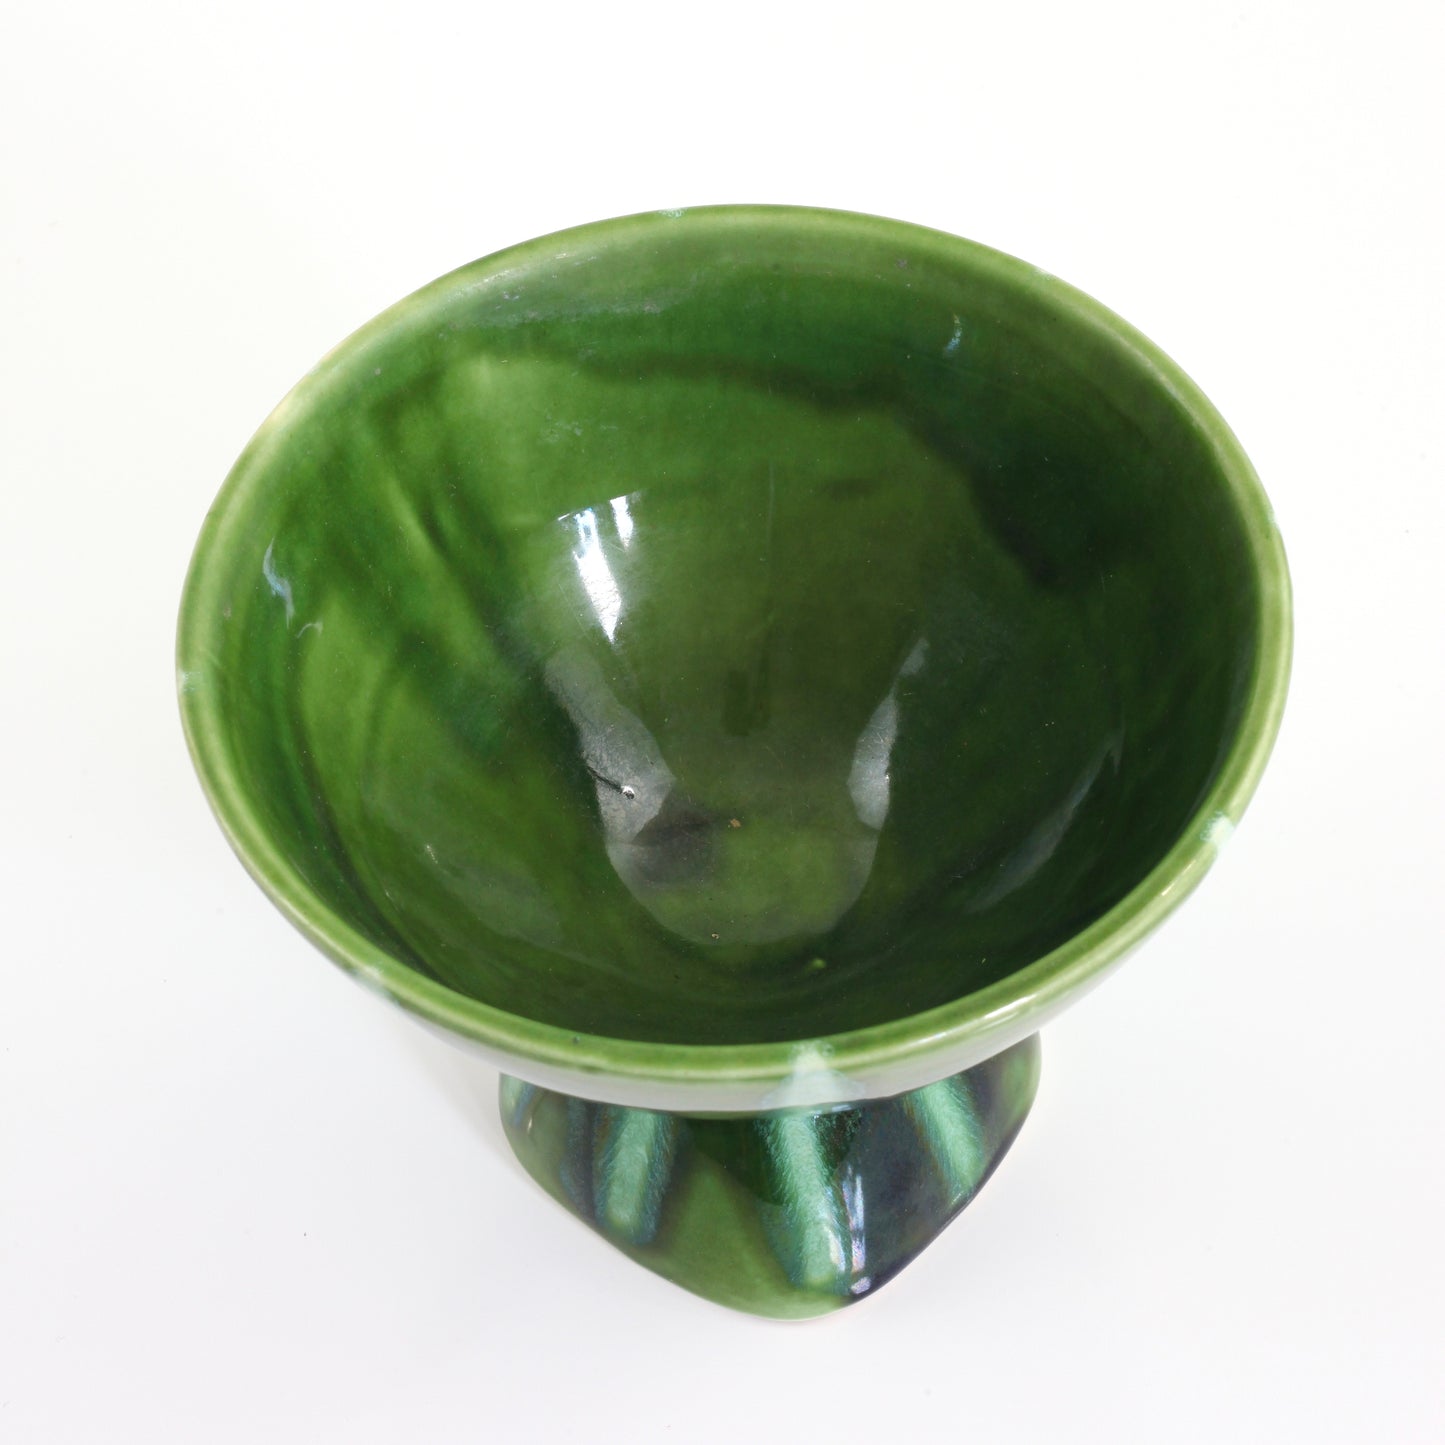 SOLD - Mid Century Modern Emerald Green Reactive Glaze Pedestal Planter